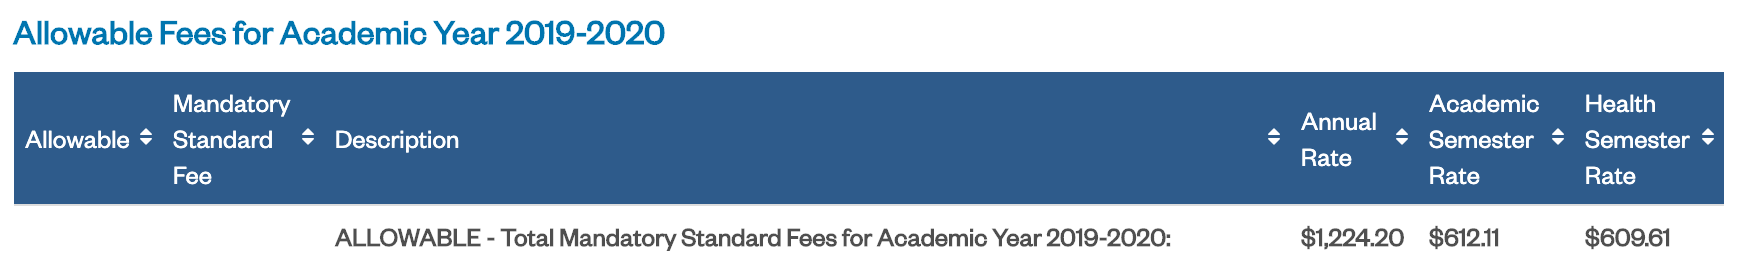 Grad Student Allowable Fees